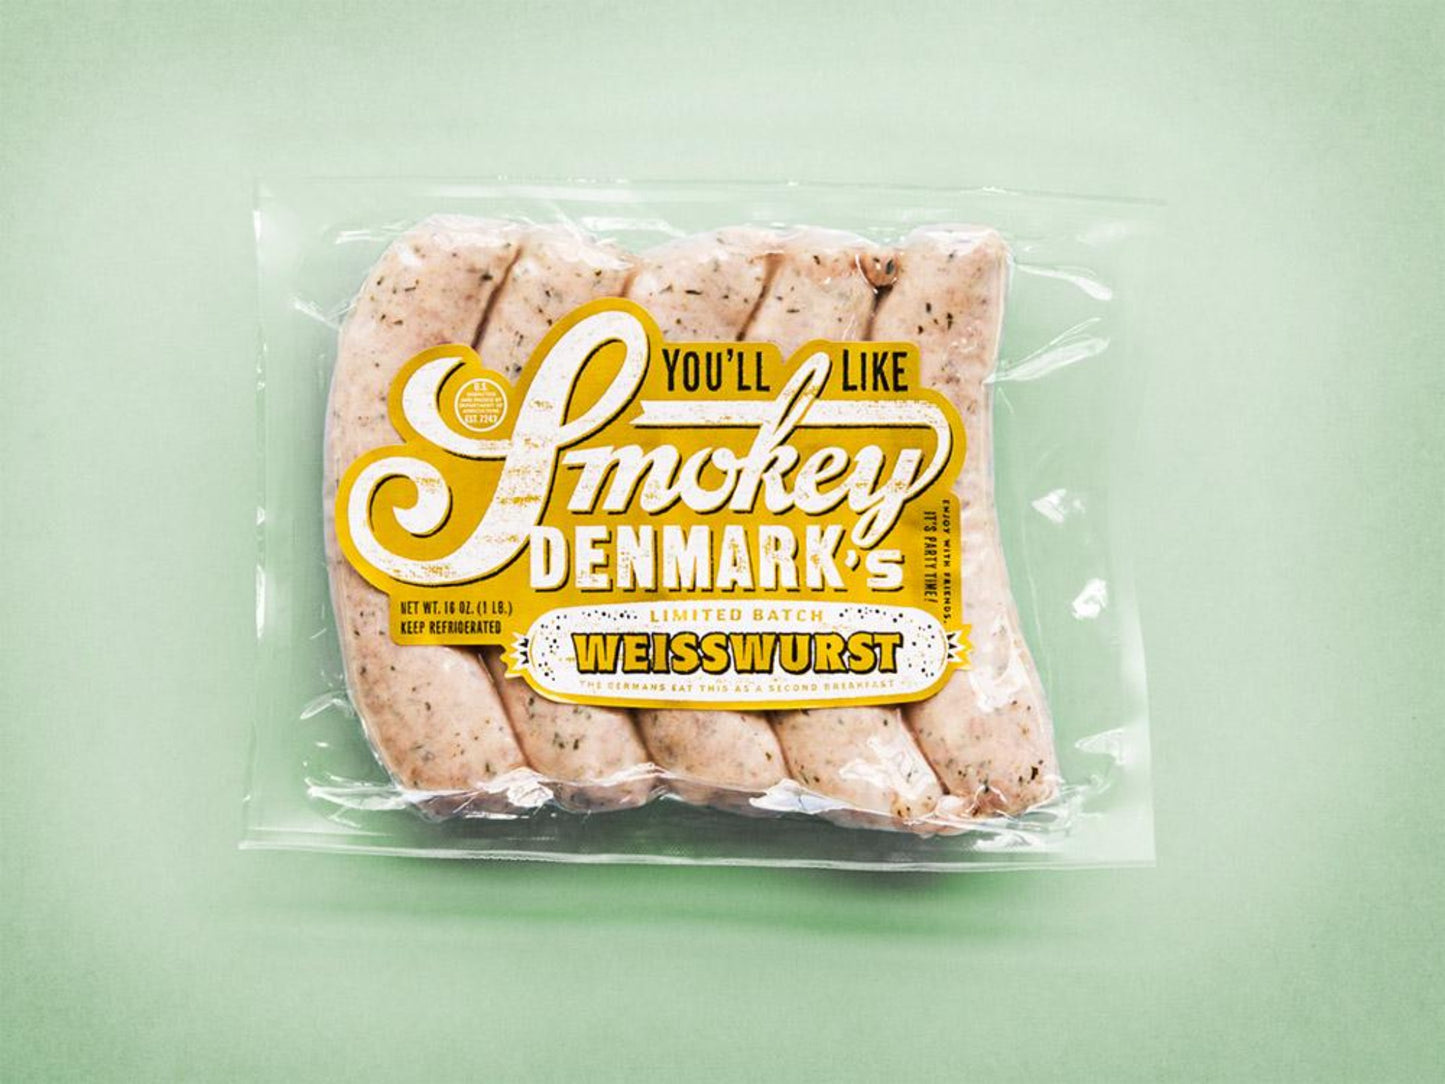 Smokey Denmark's Weisswurst